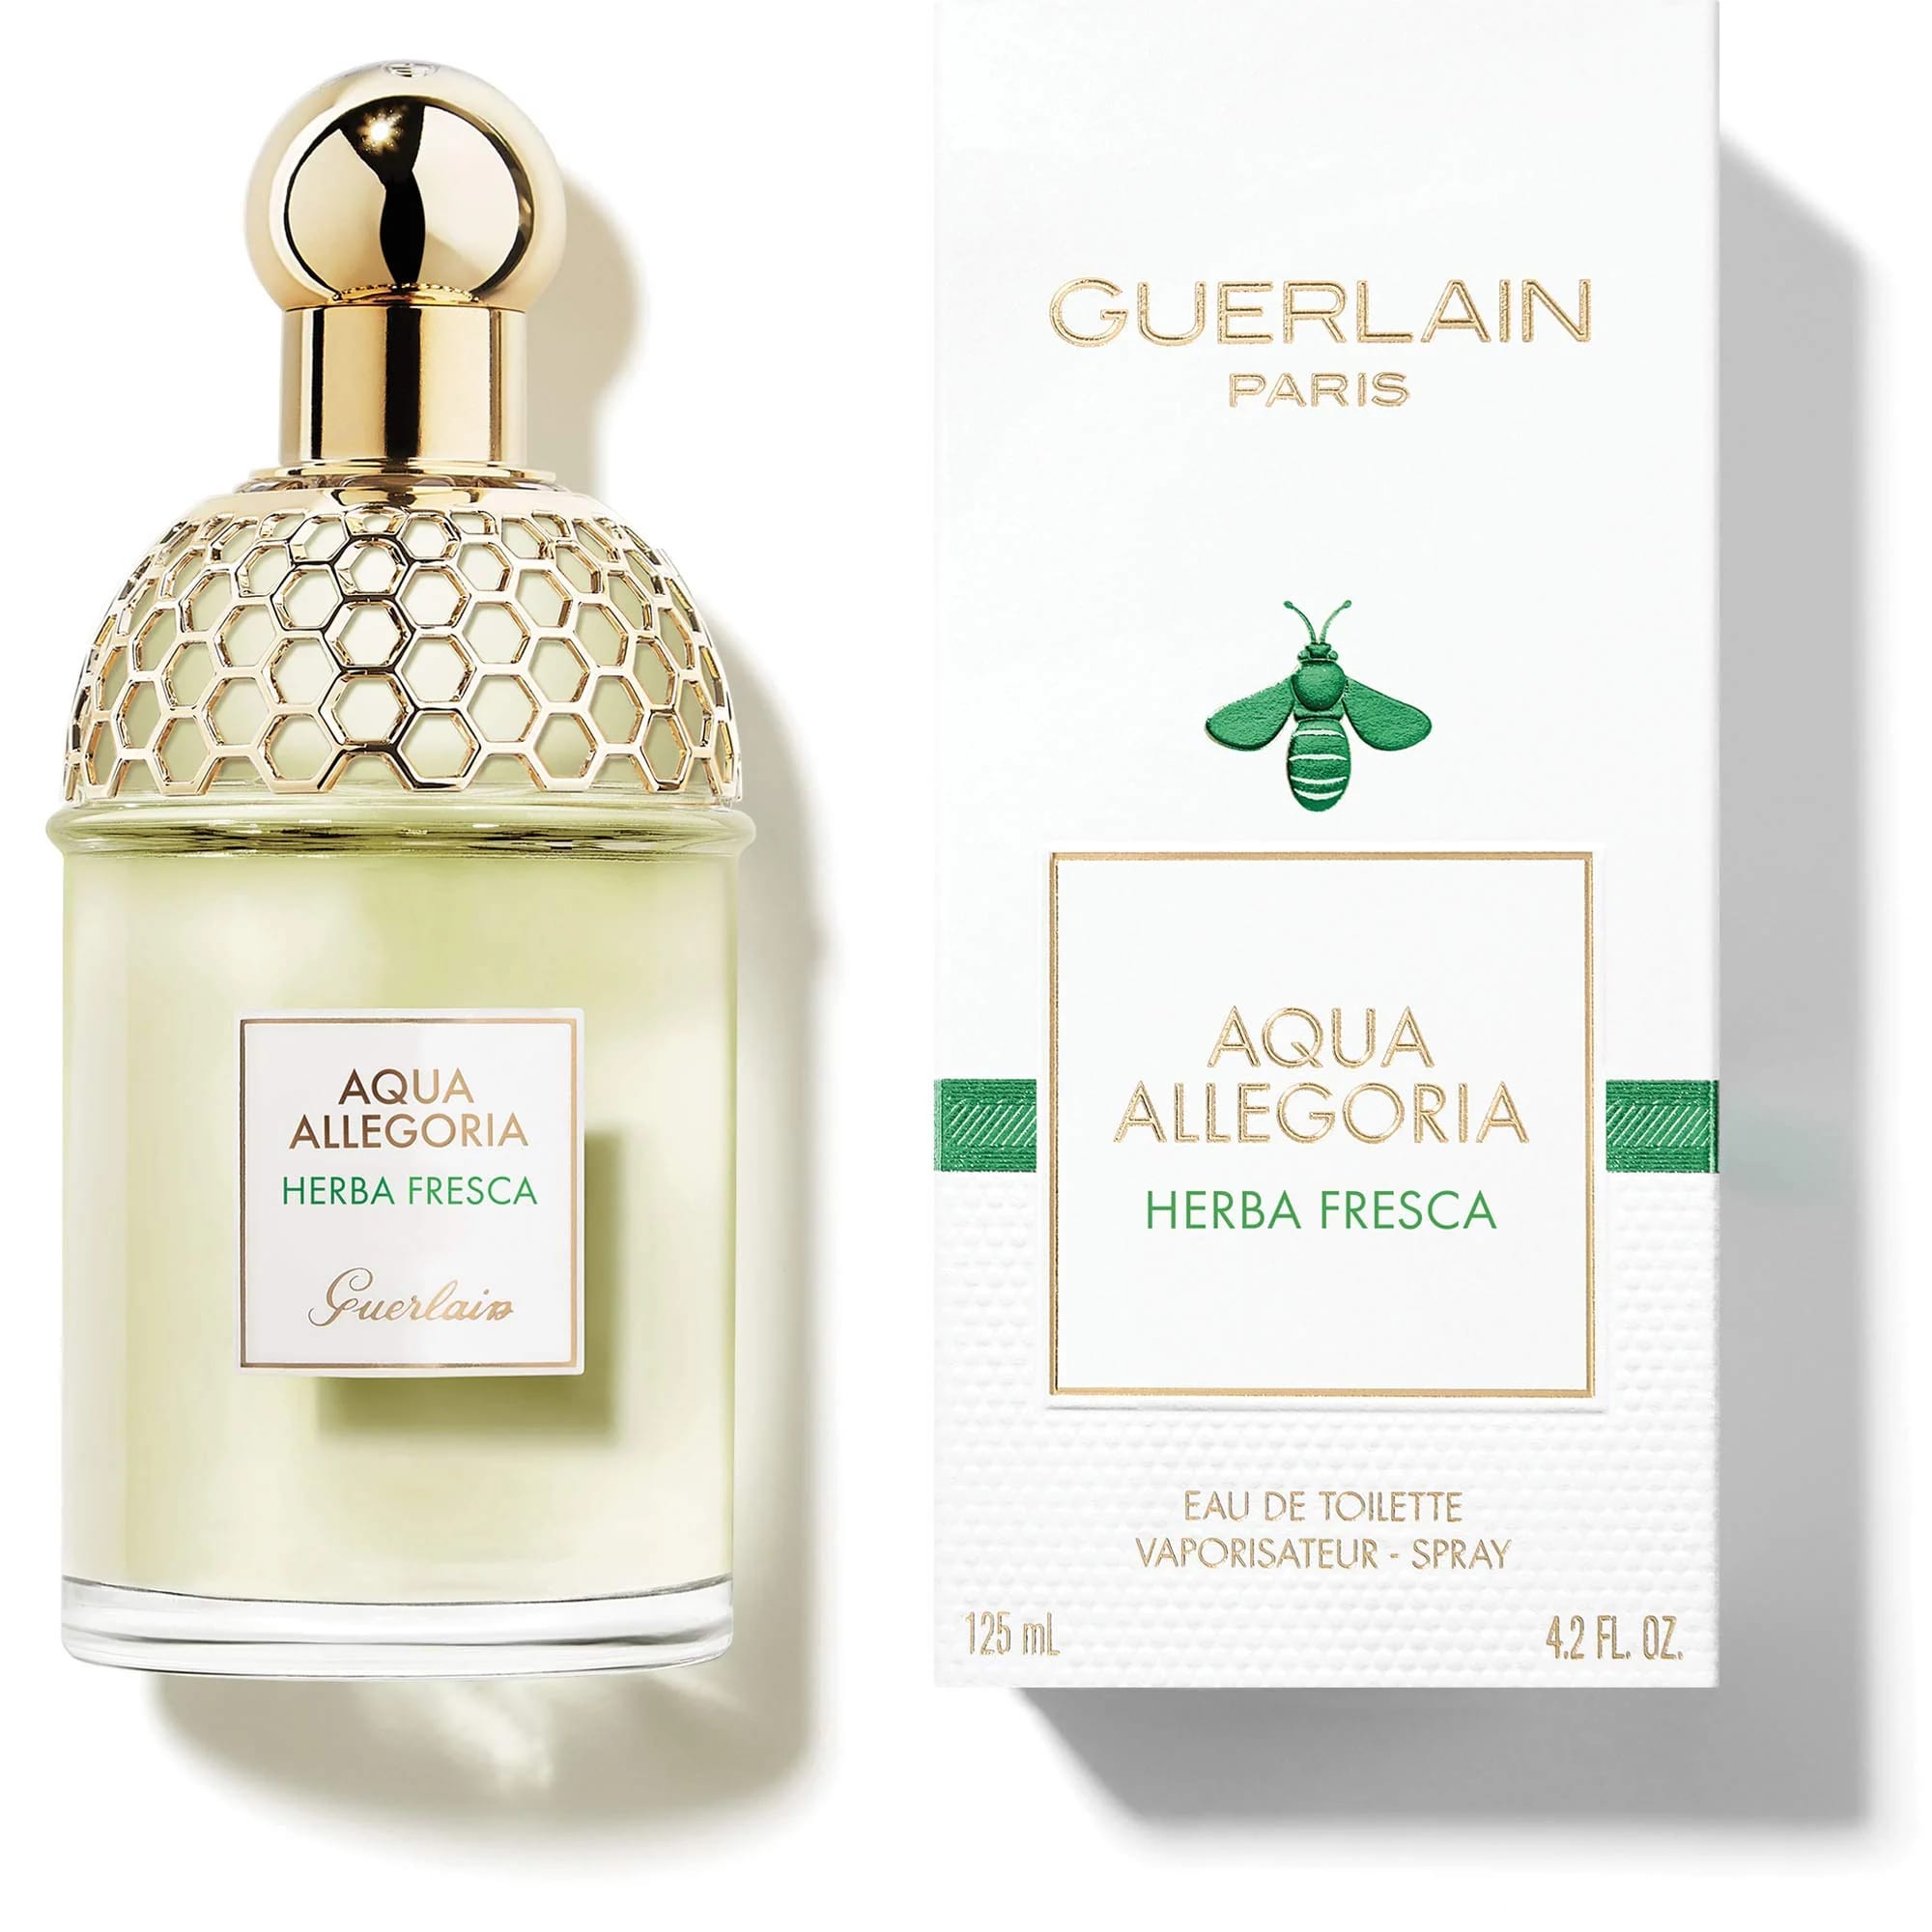 Guerlain Aqua Allegoria Herba Fresca EDT Spray Perfume for Women by Guerlain